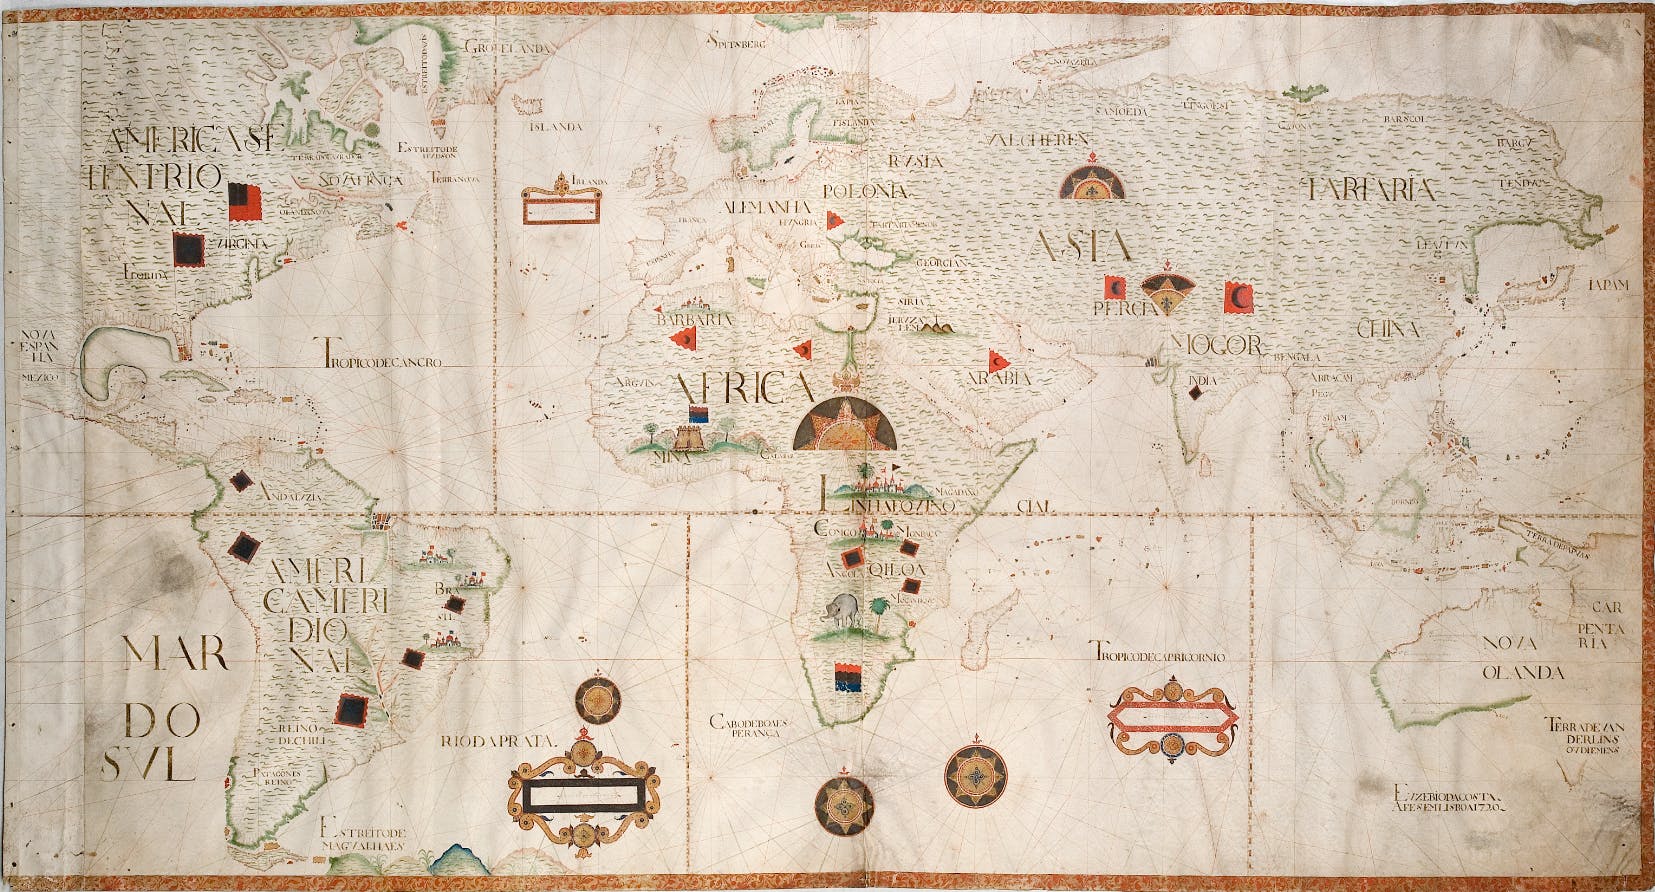 Mapa Mundi (1720), by Eusébio da Costa, cartographer - Museu da Marinha, Lisbon